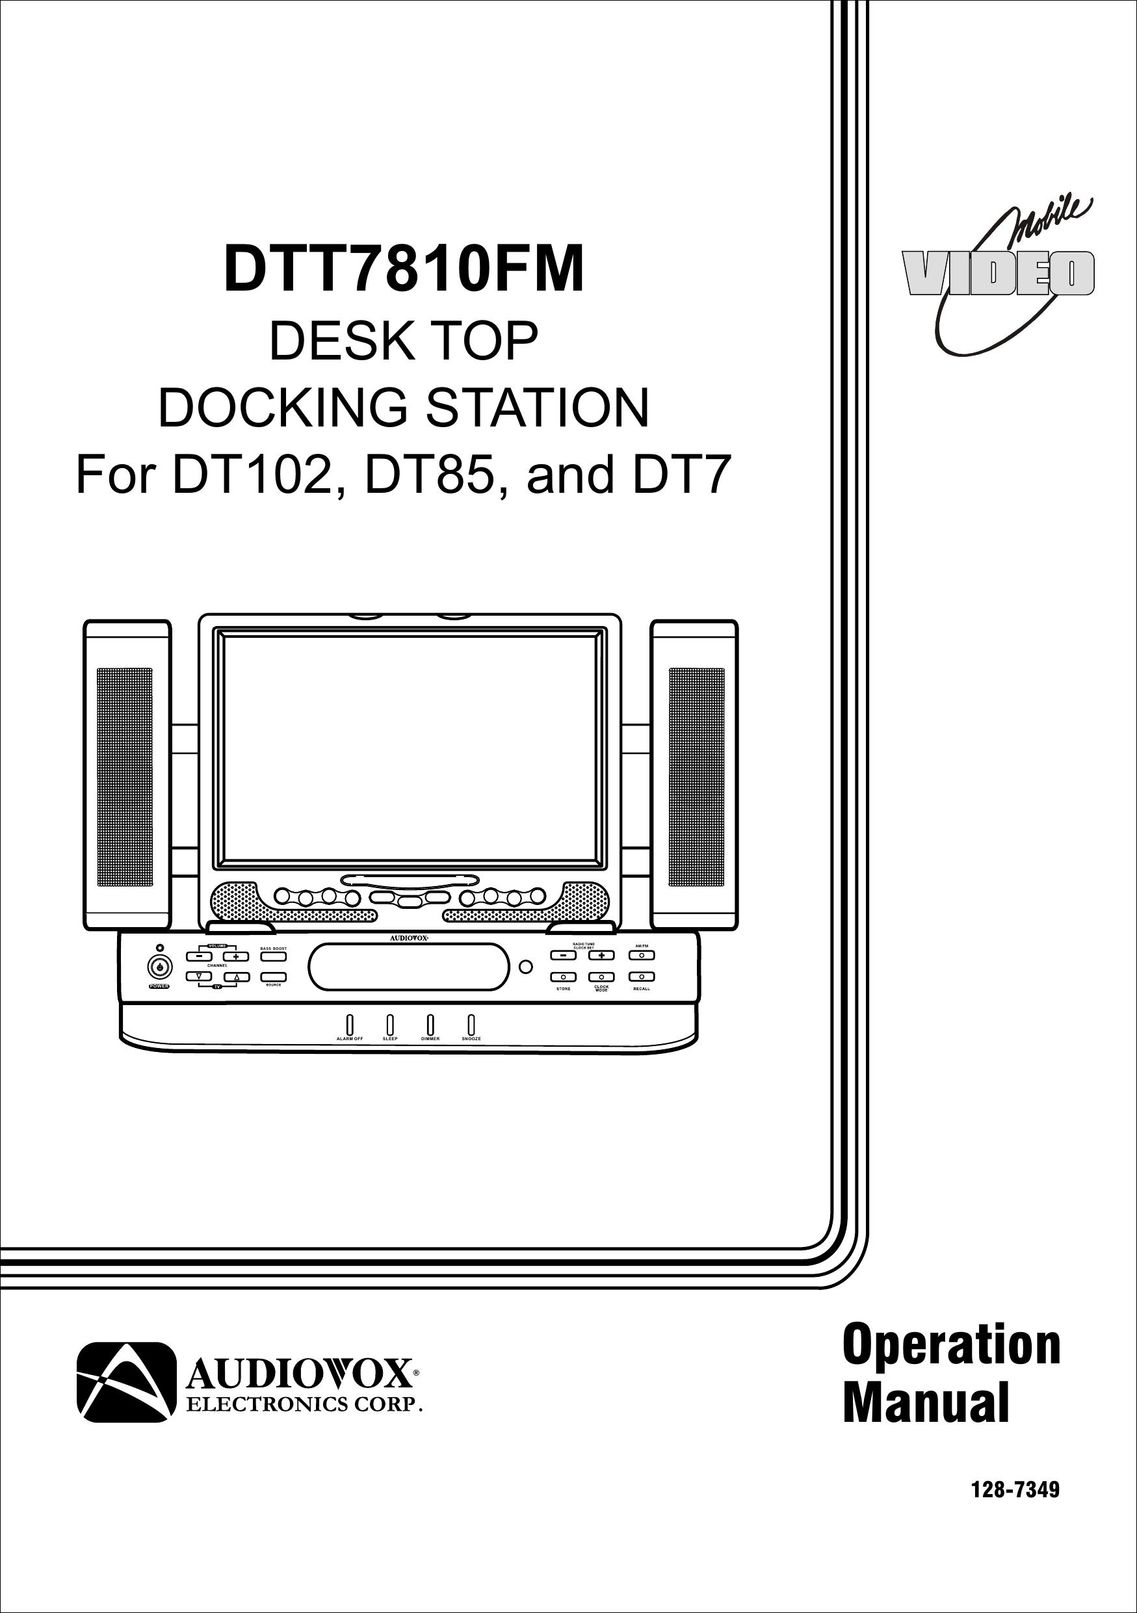 Audiovox DTT7810FM MP3 Docking Station User Manual